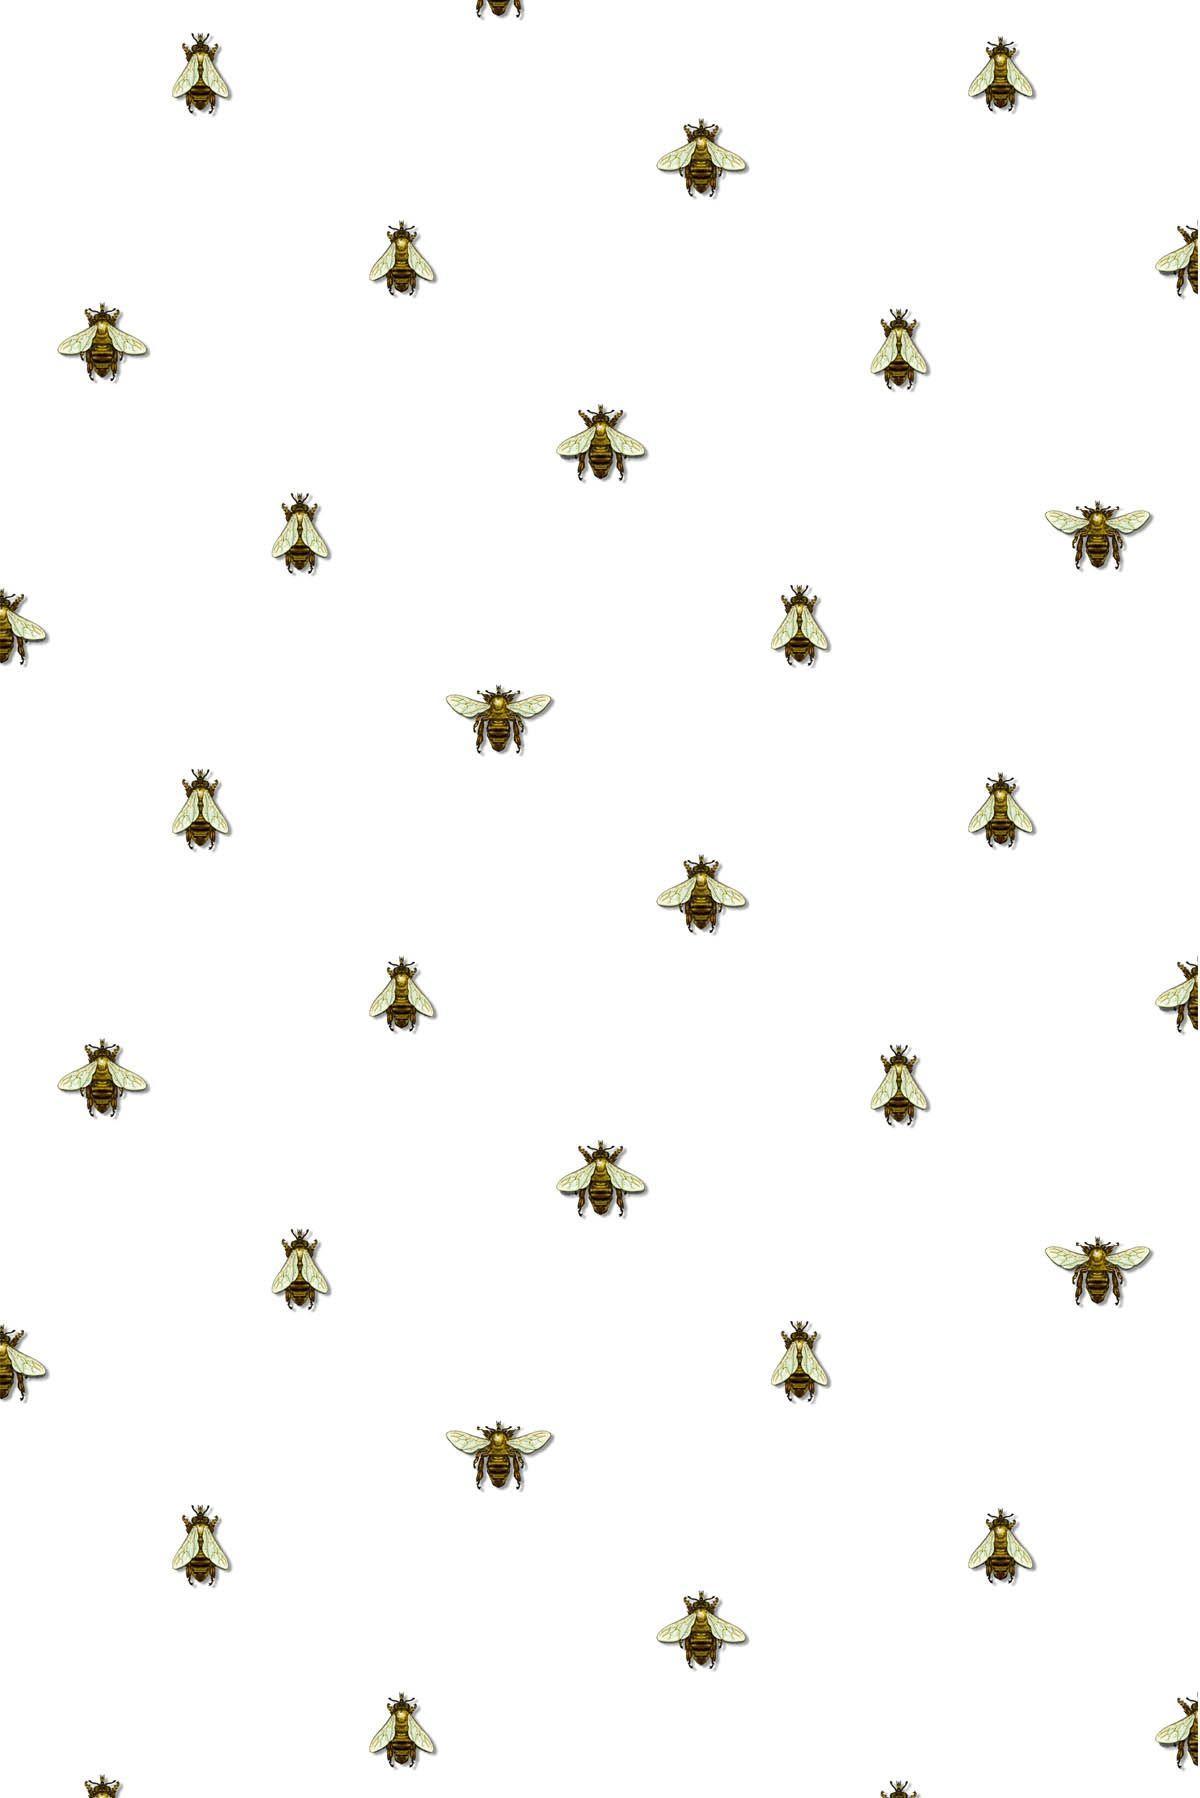 Bee Wallpaper For Ipad